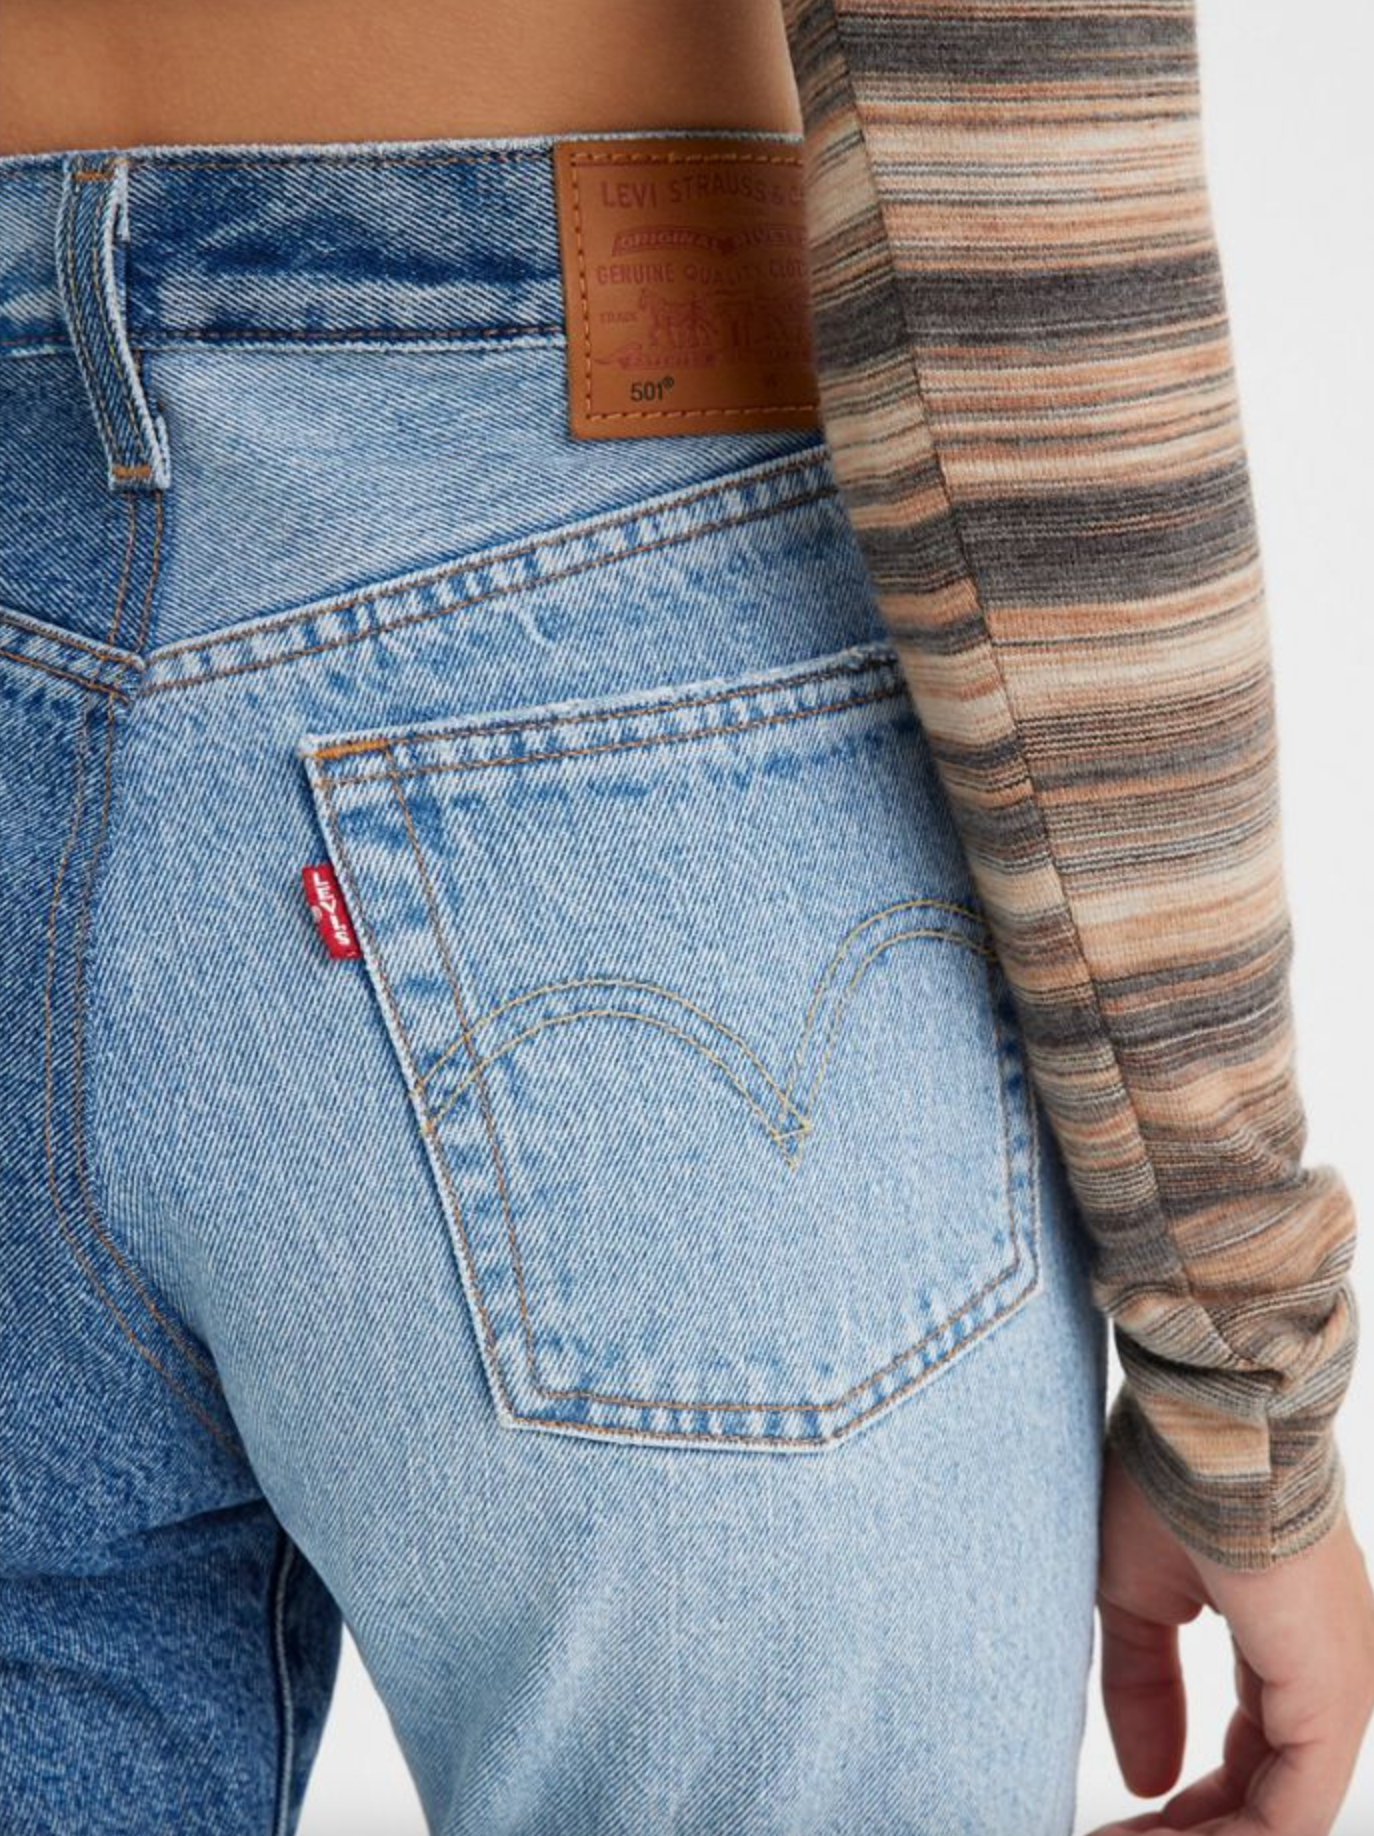 Levi's® 501® Original Jean - Women's Jeans in Two Tone Indigo